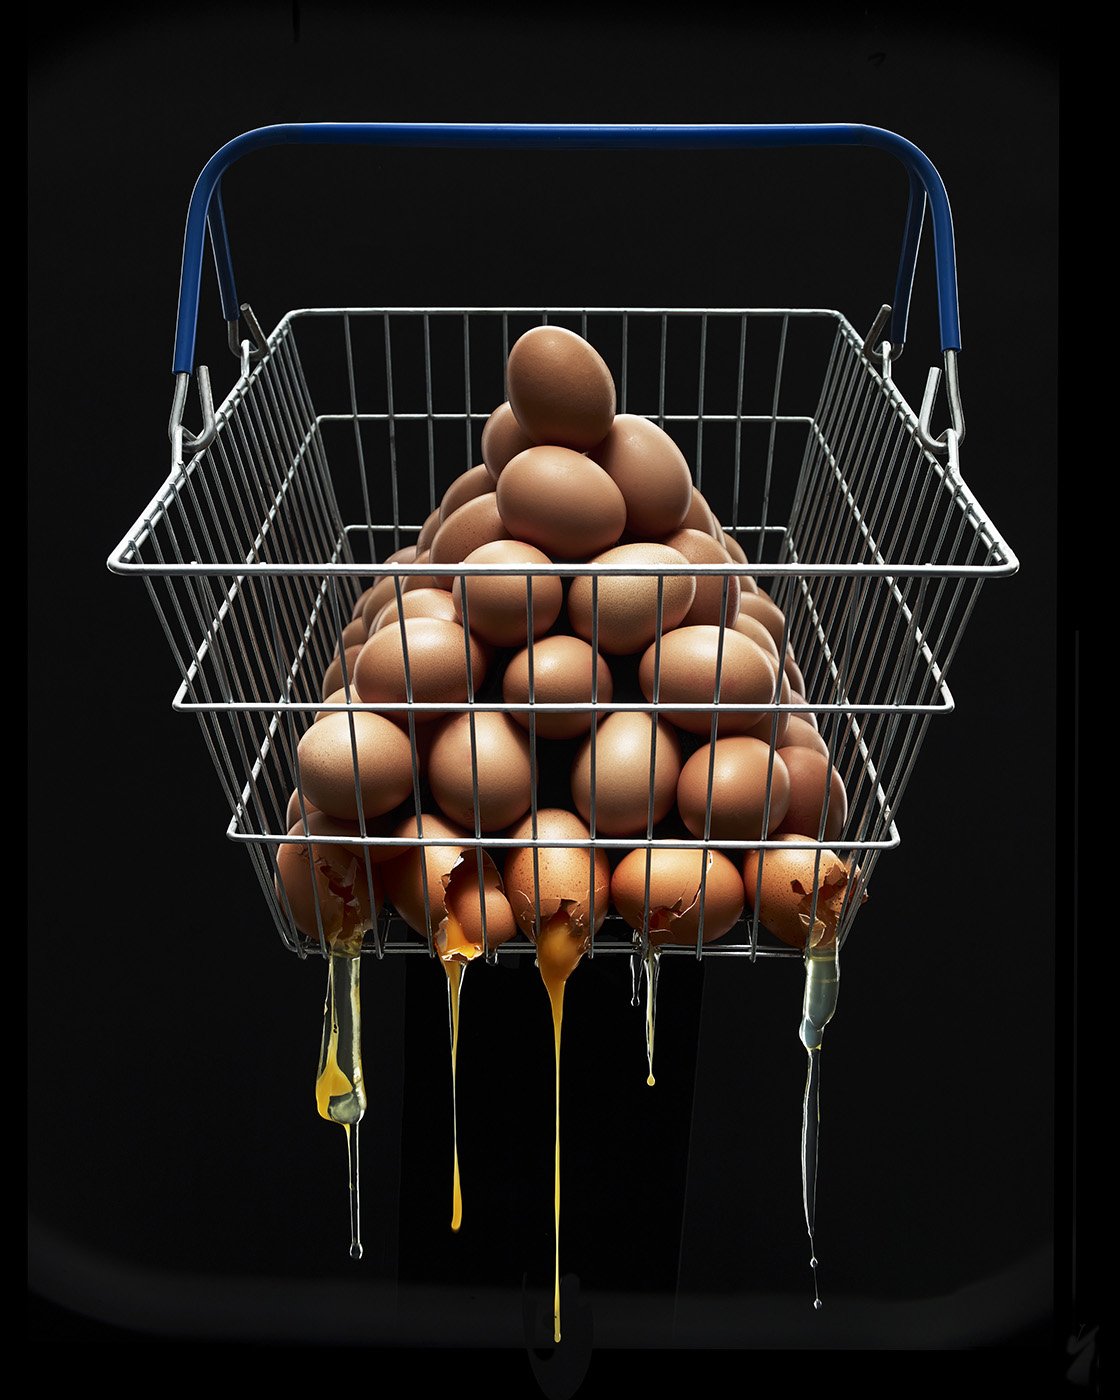 Eggs in a basket.jpg